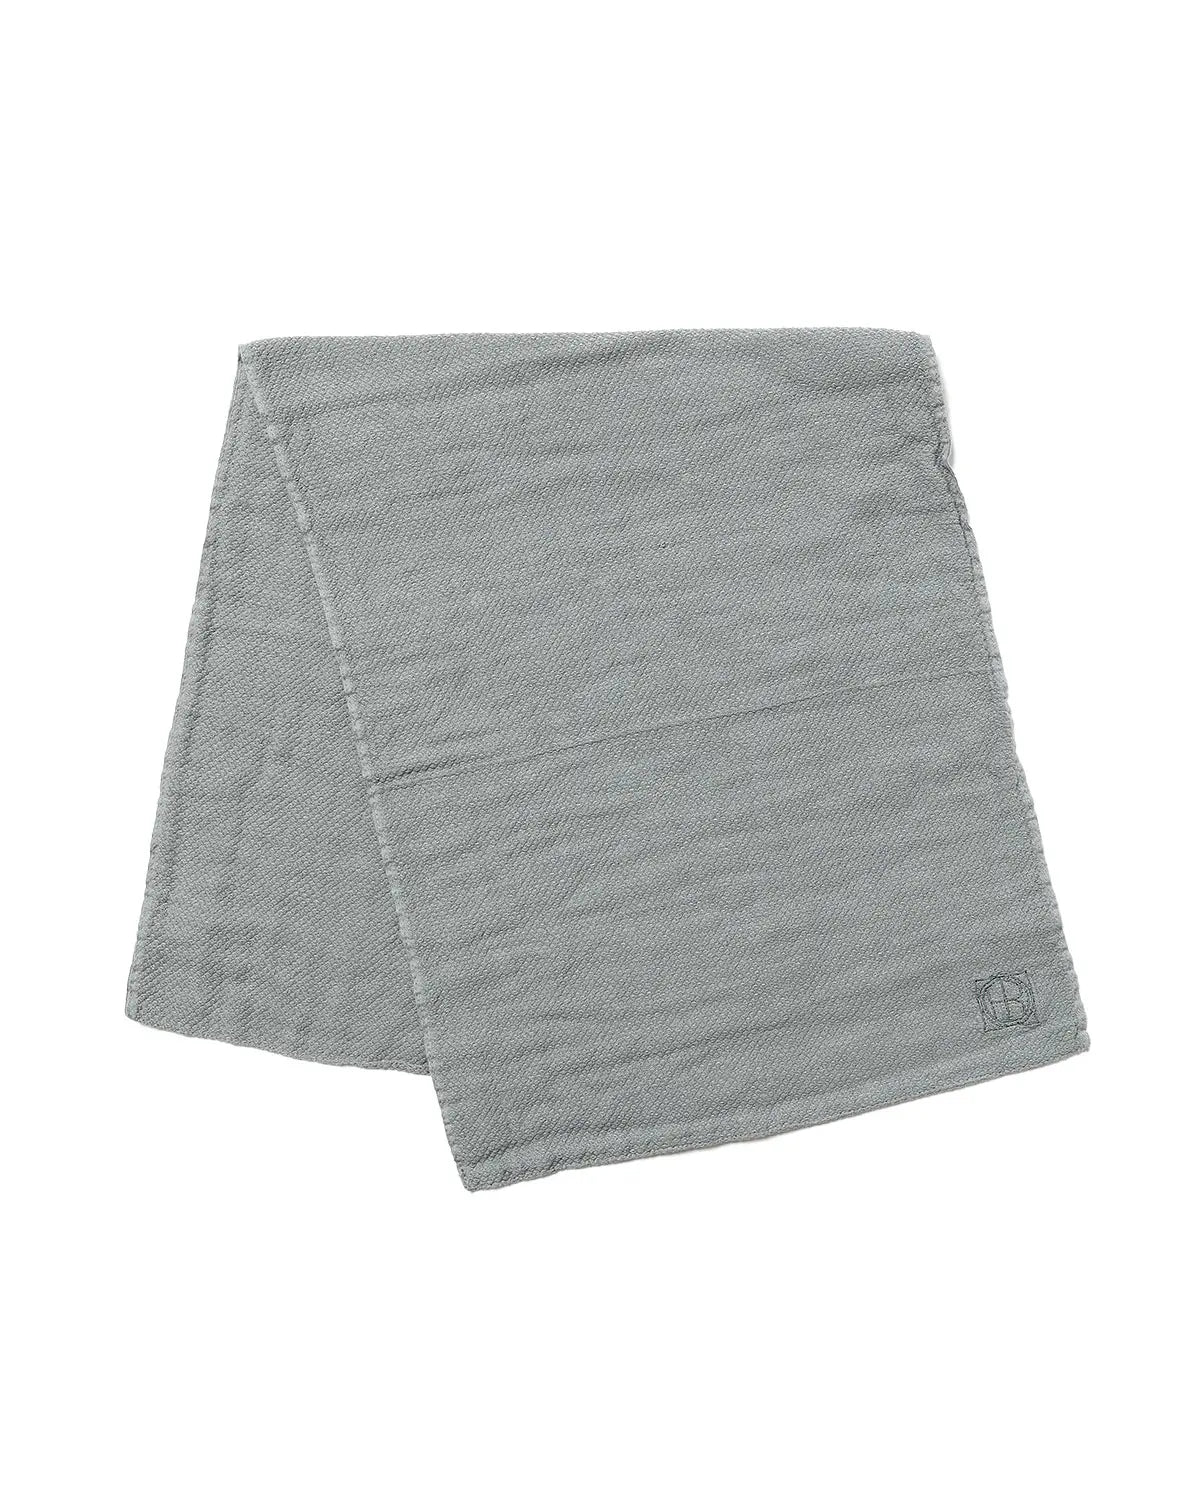 Face Towel Cotton Dobby Cloth